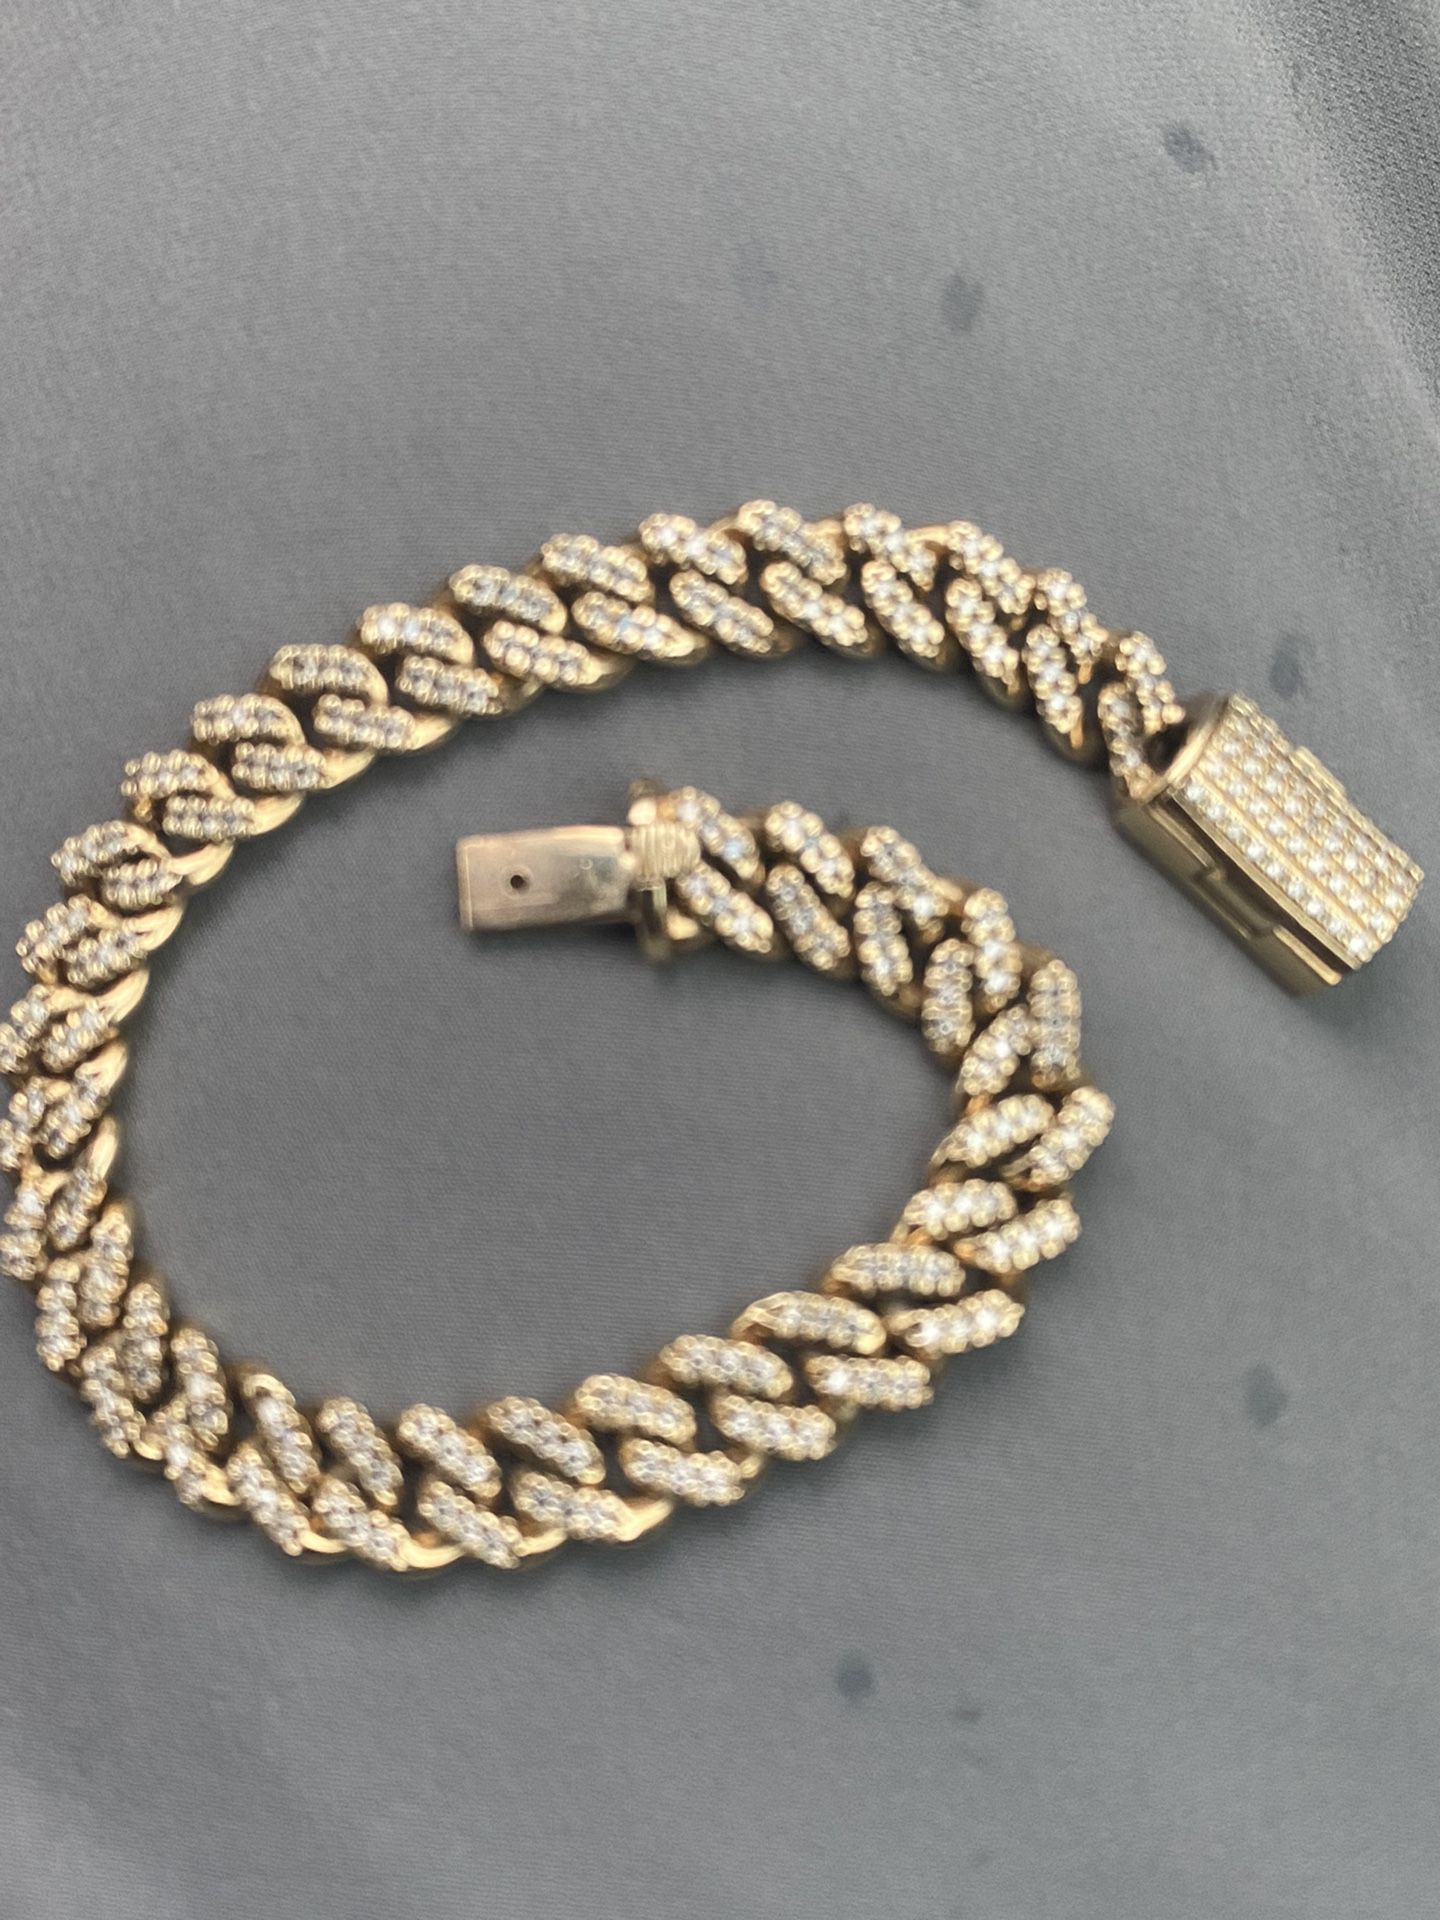 Diamond Bracelet 10k Gold. 4 Carat Total Diamonds